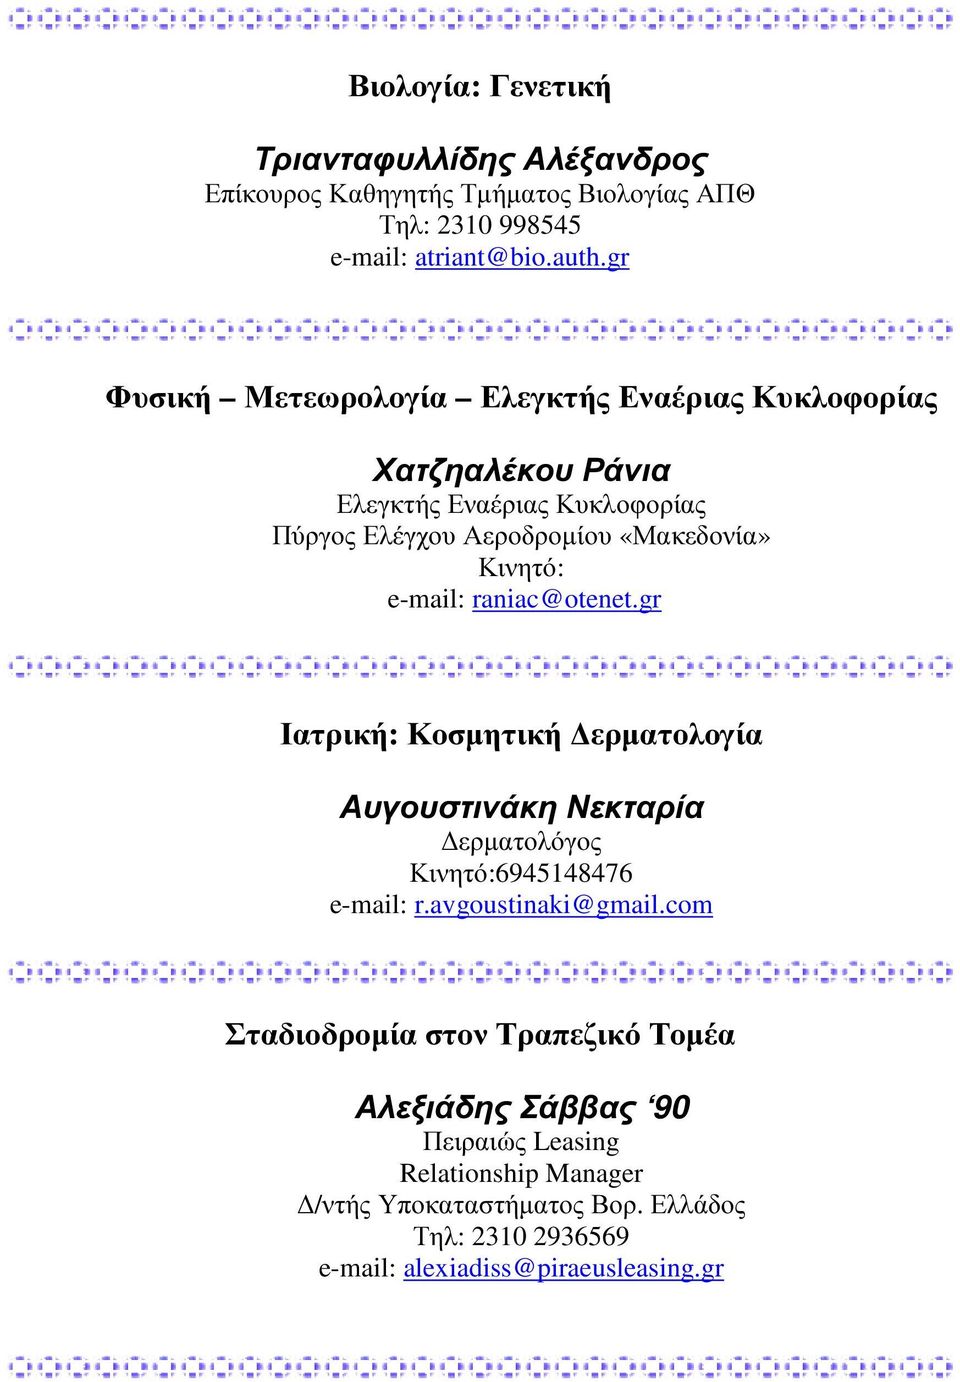 e-mail: raniac@otenet.gr Ιατρική: Κοσµητική ερµατολογία Αυγουστινάκη Νεκταρία ερµατολόγος Κινητό:6945148476 e-mail: r.avgoustinaki@gmail.